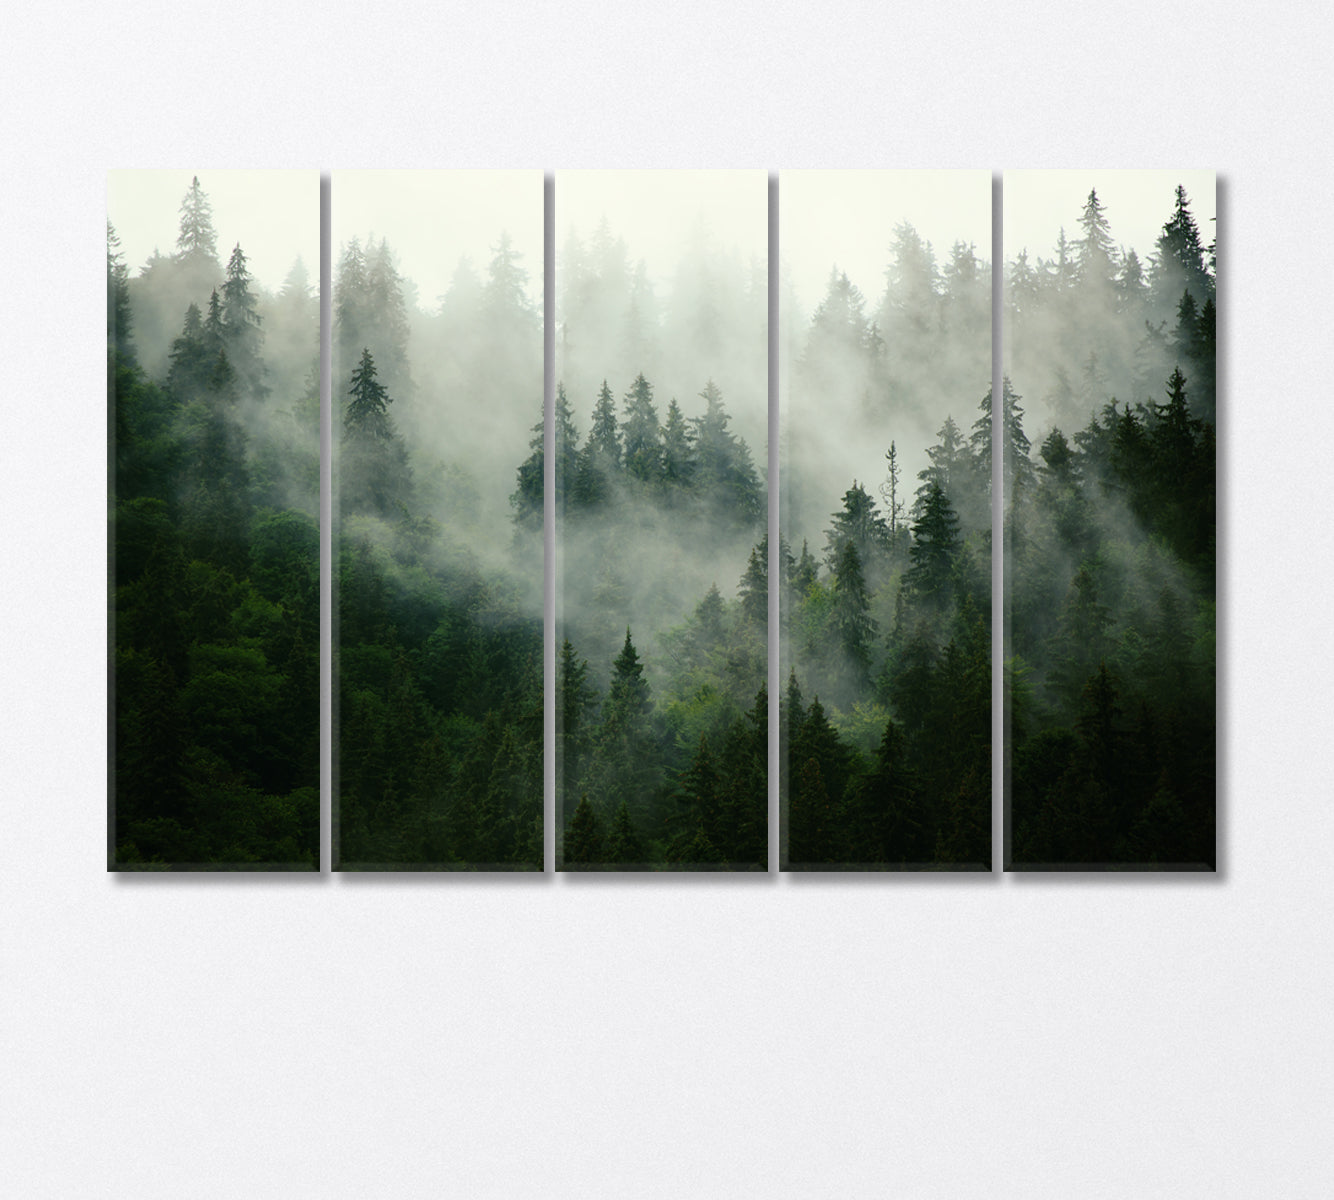 Misty Landscape with Fir Forest Canvas Print-Canvas Print-CetArt-5 Panels-36x24 inches-CetArt